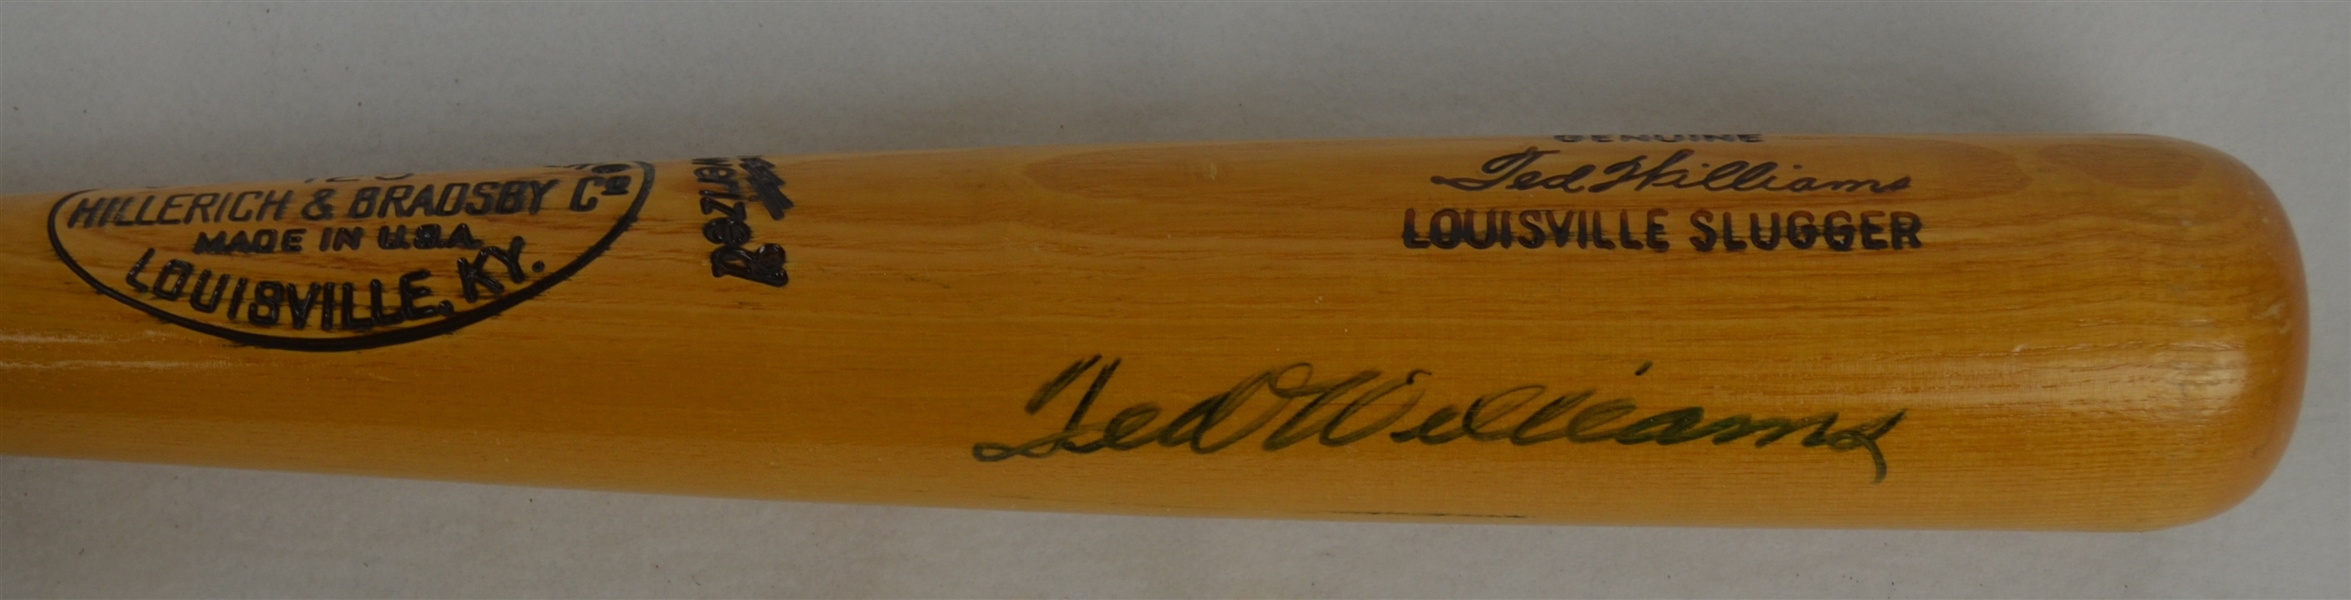 Ted Williams Autographed Signature Model W215 Baseball Bat